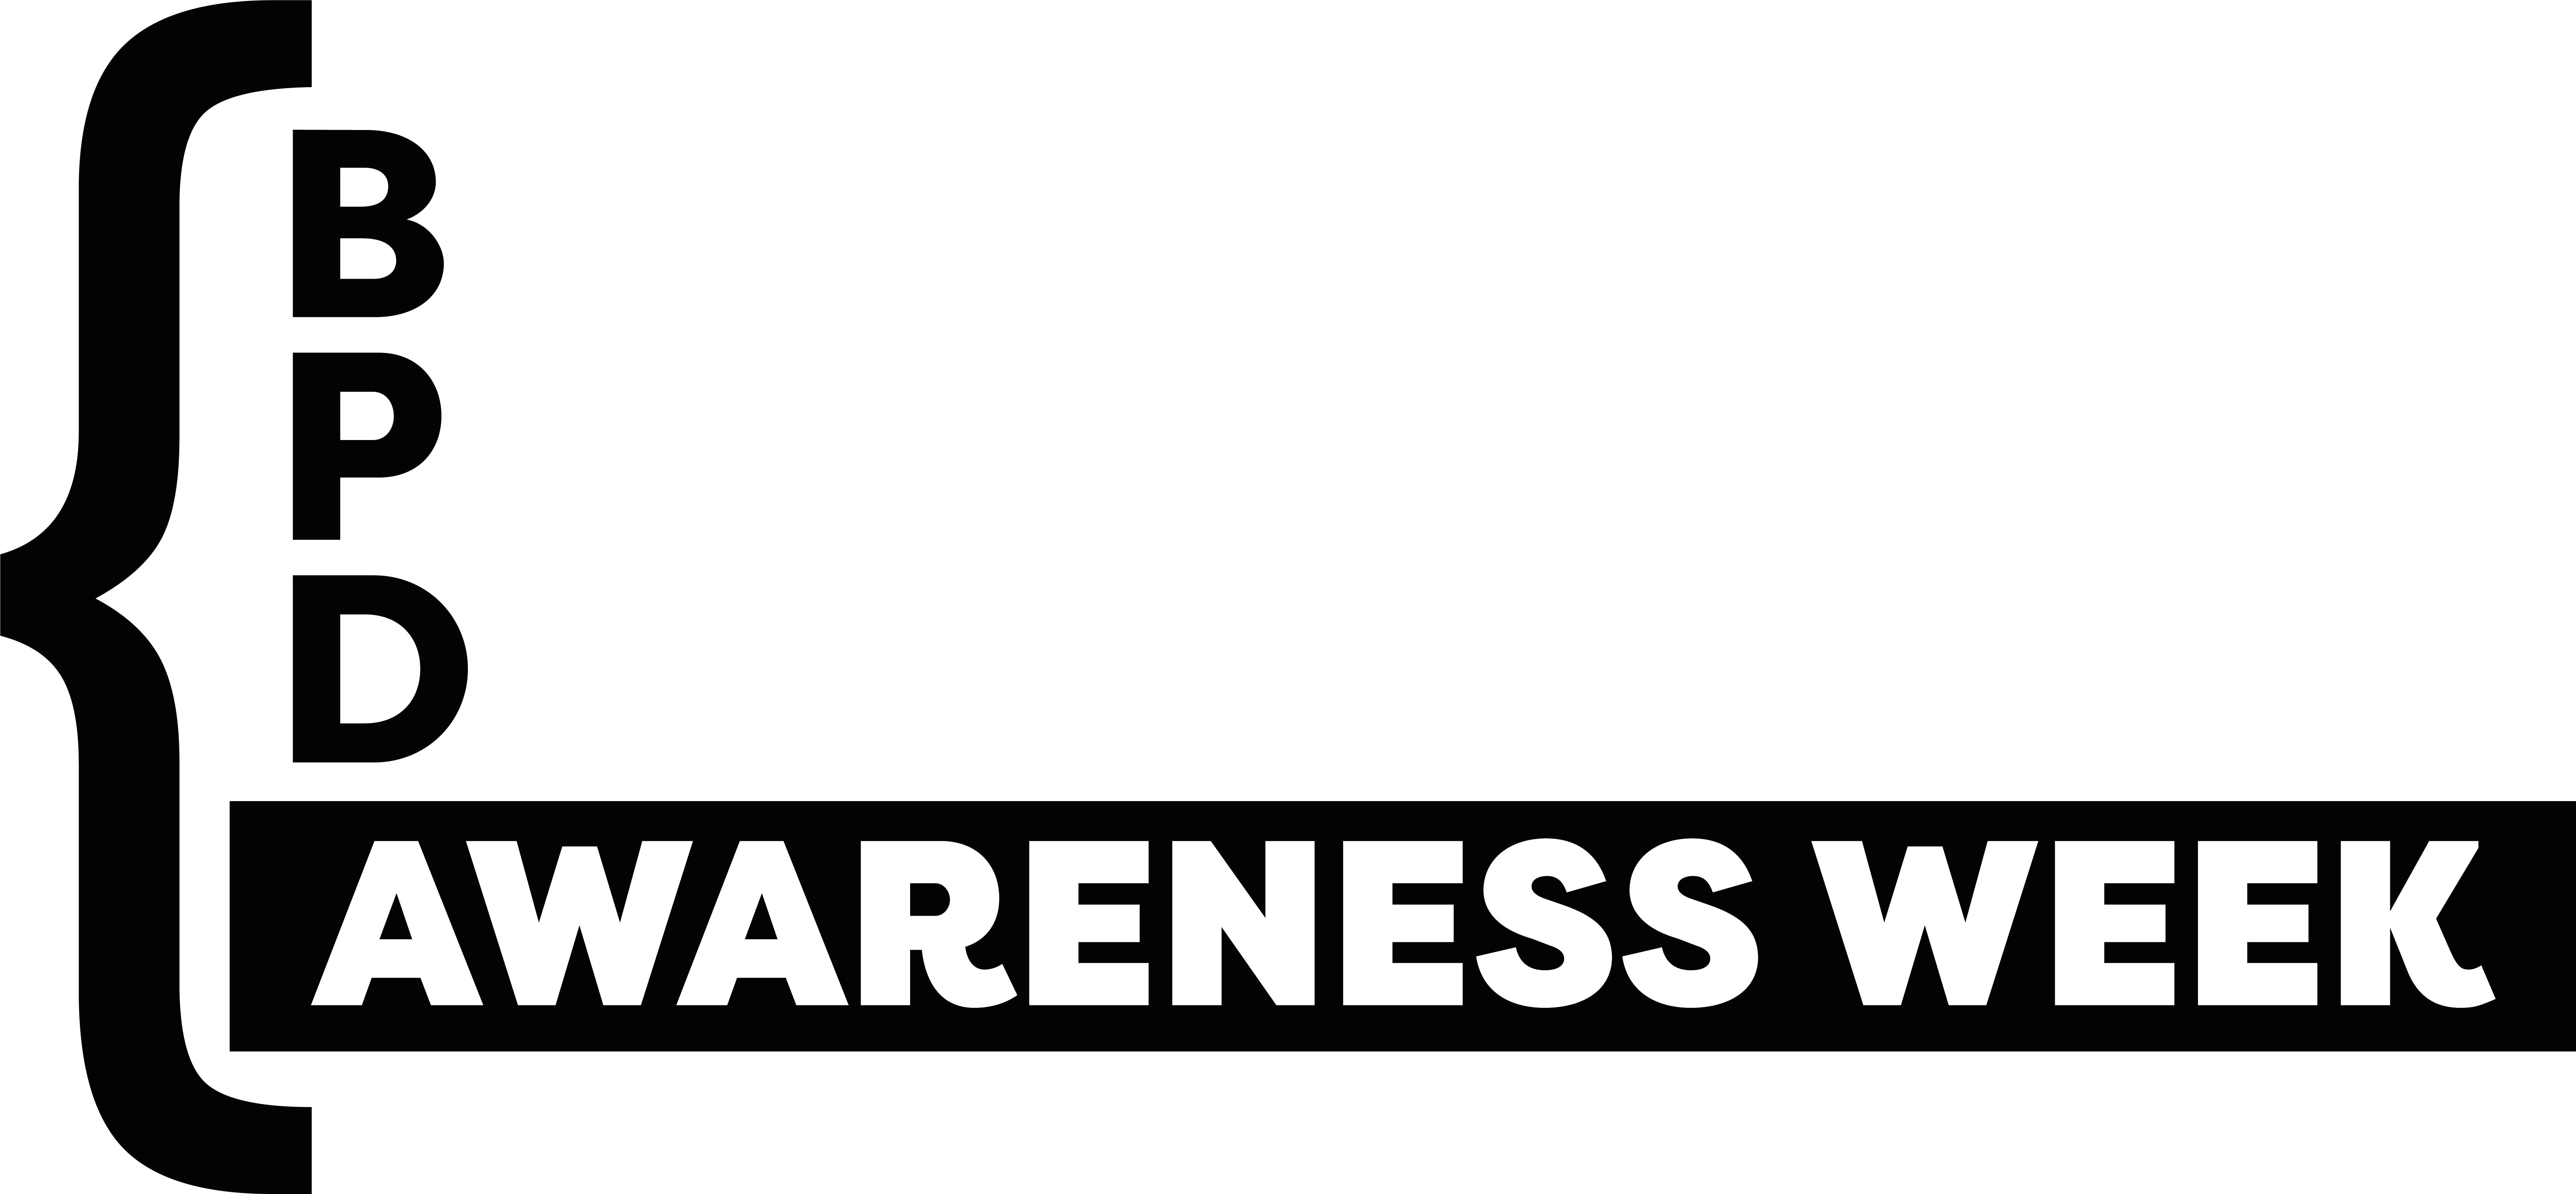 BPD Awareness week logo